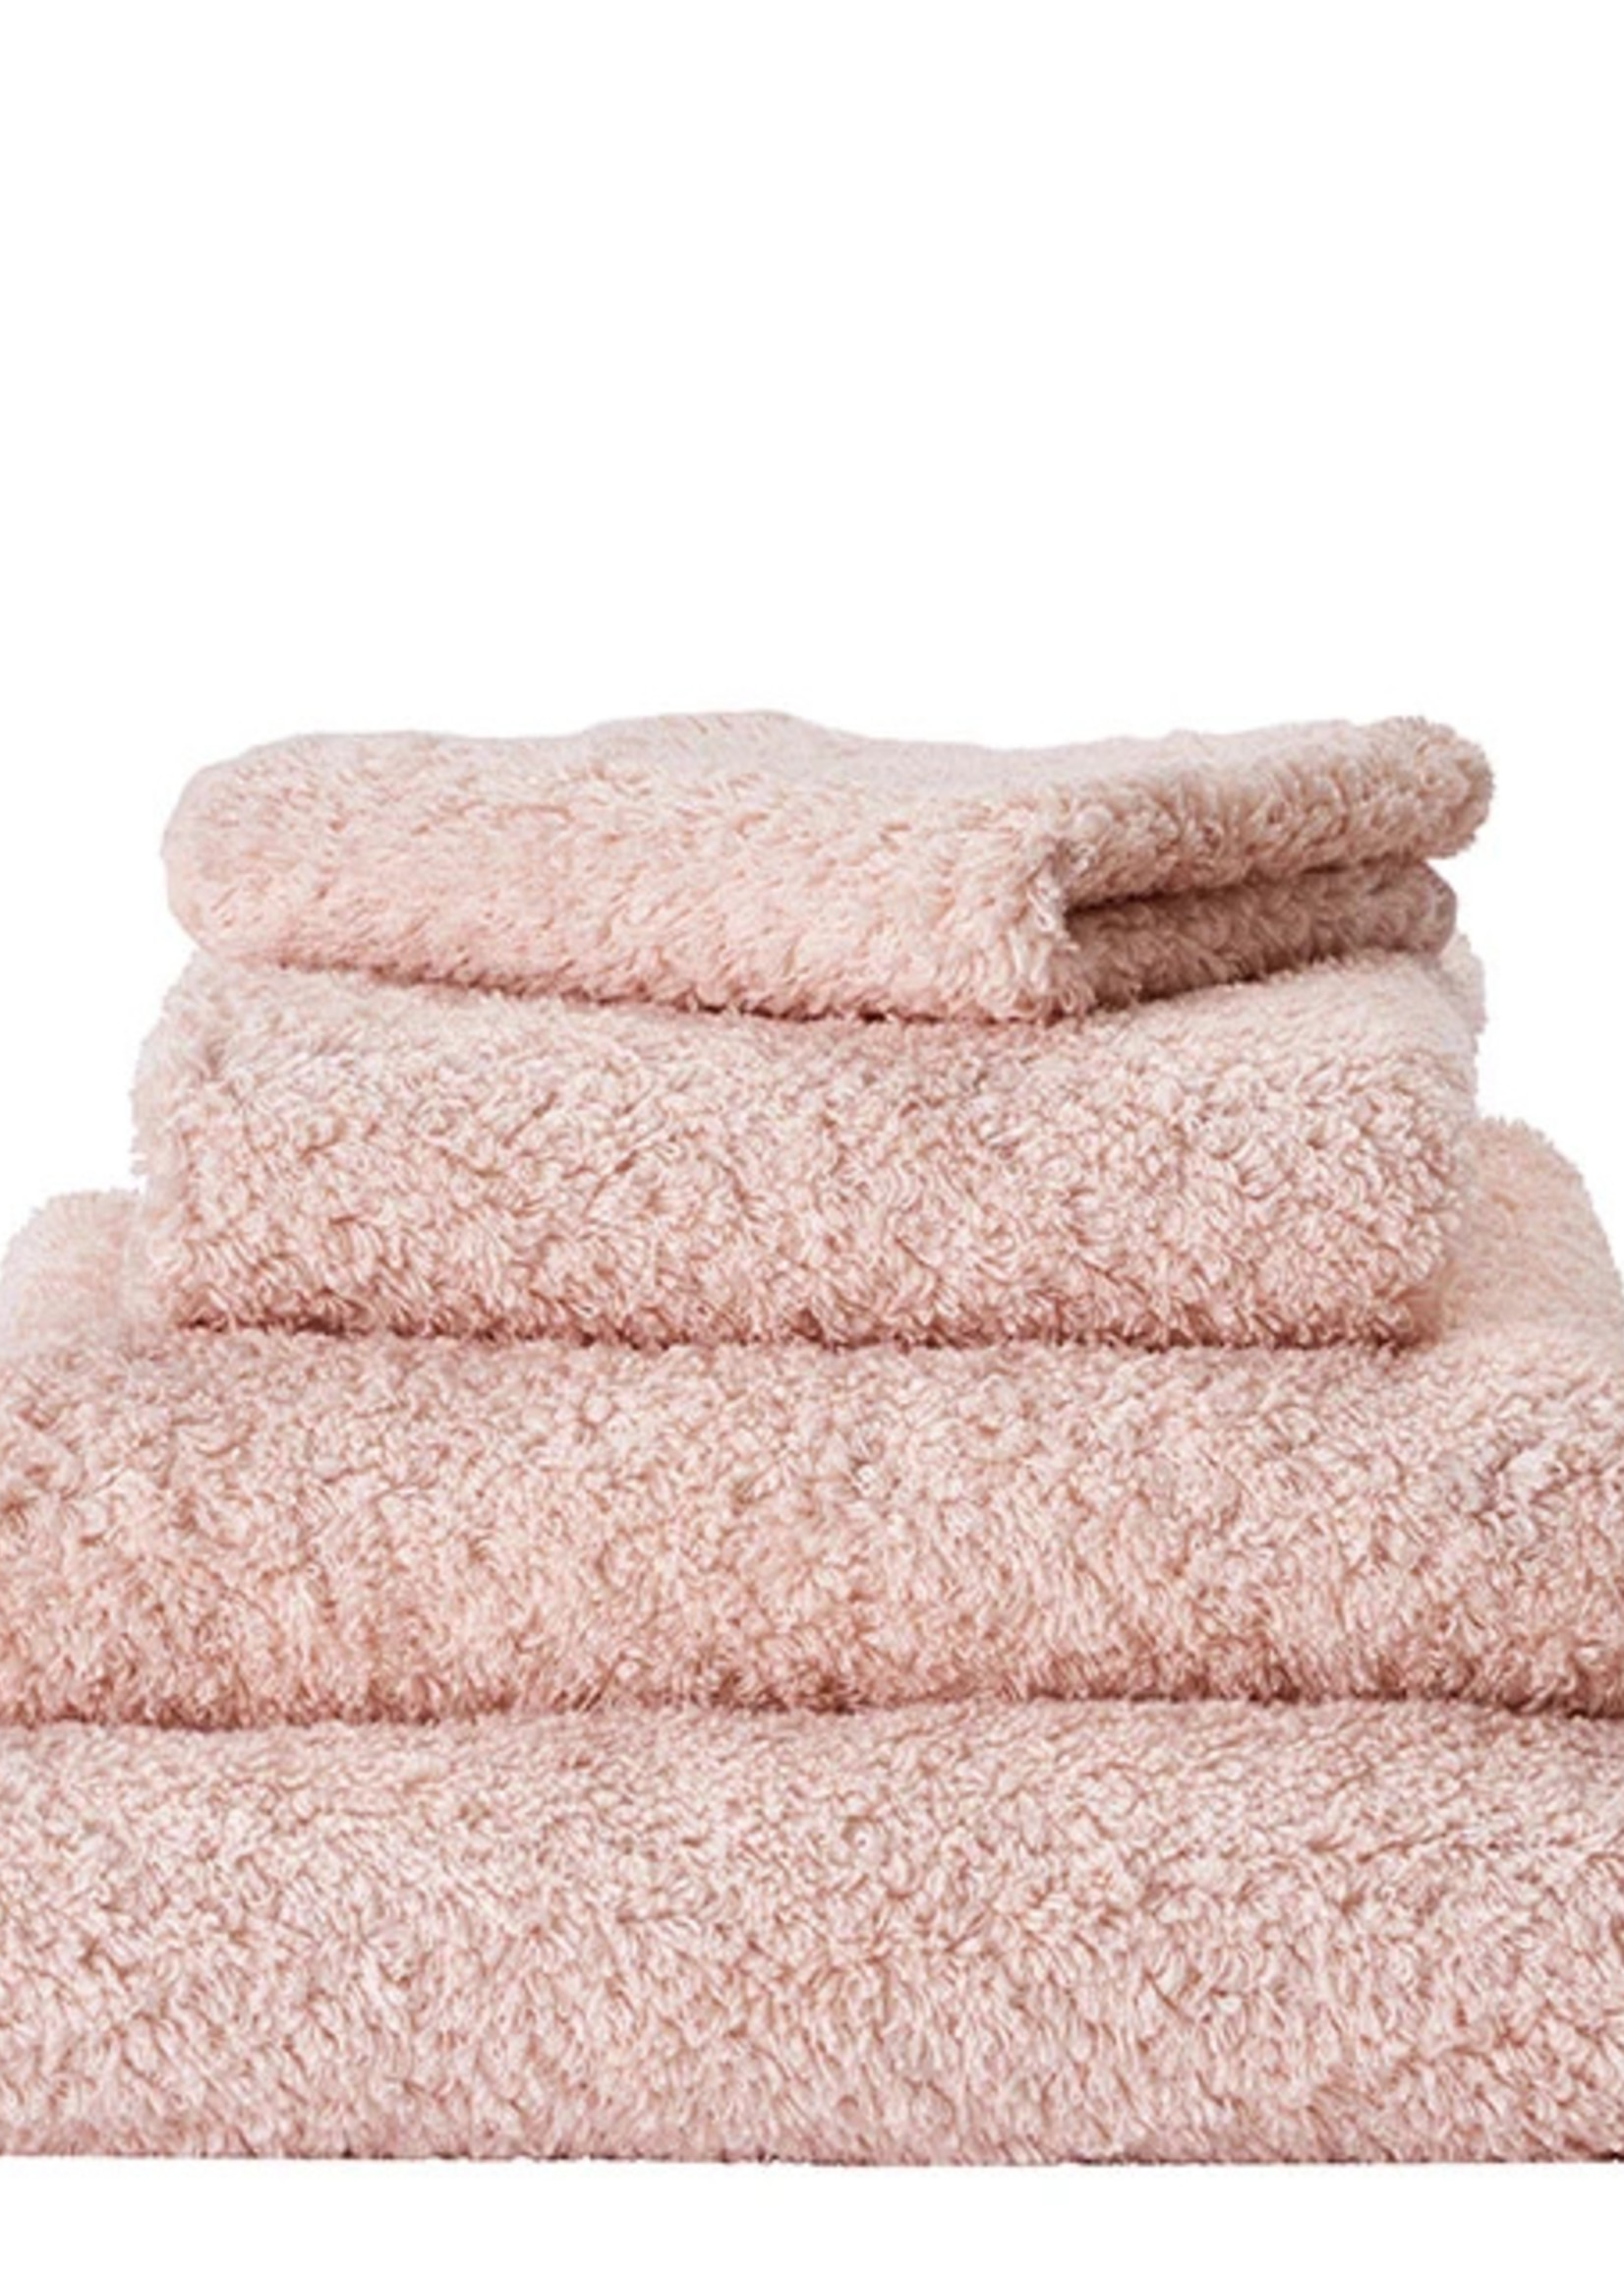 https://cdn.shoplightspeed.com/shops/614084/files/30397230/1652x2313x1/abyss-habidecor-super-pile-nude-towels.jpg